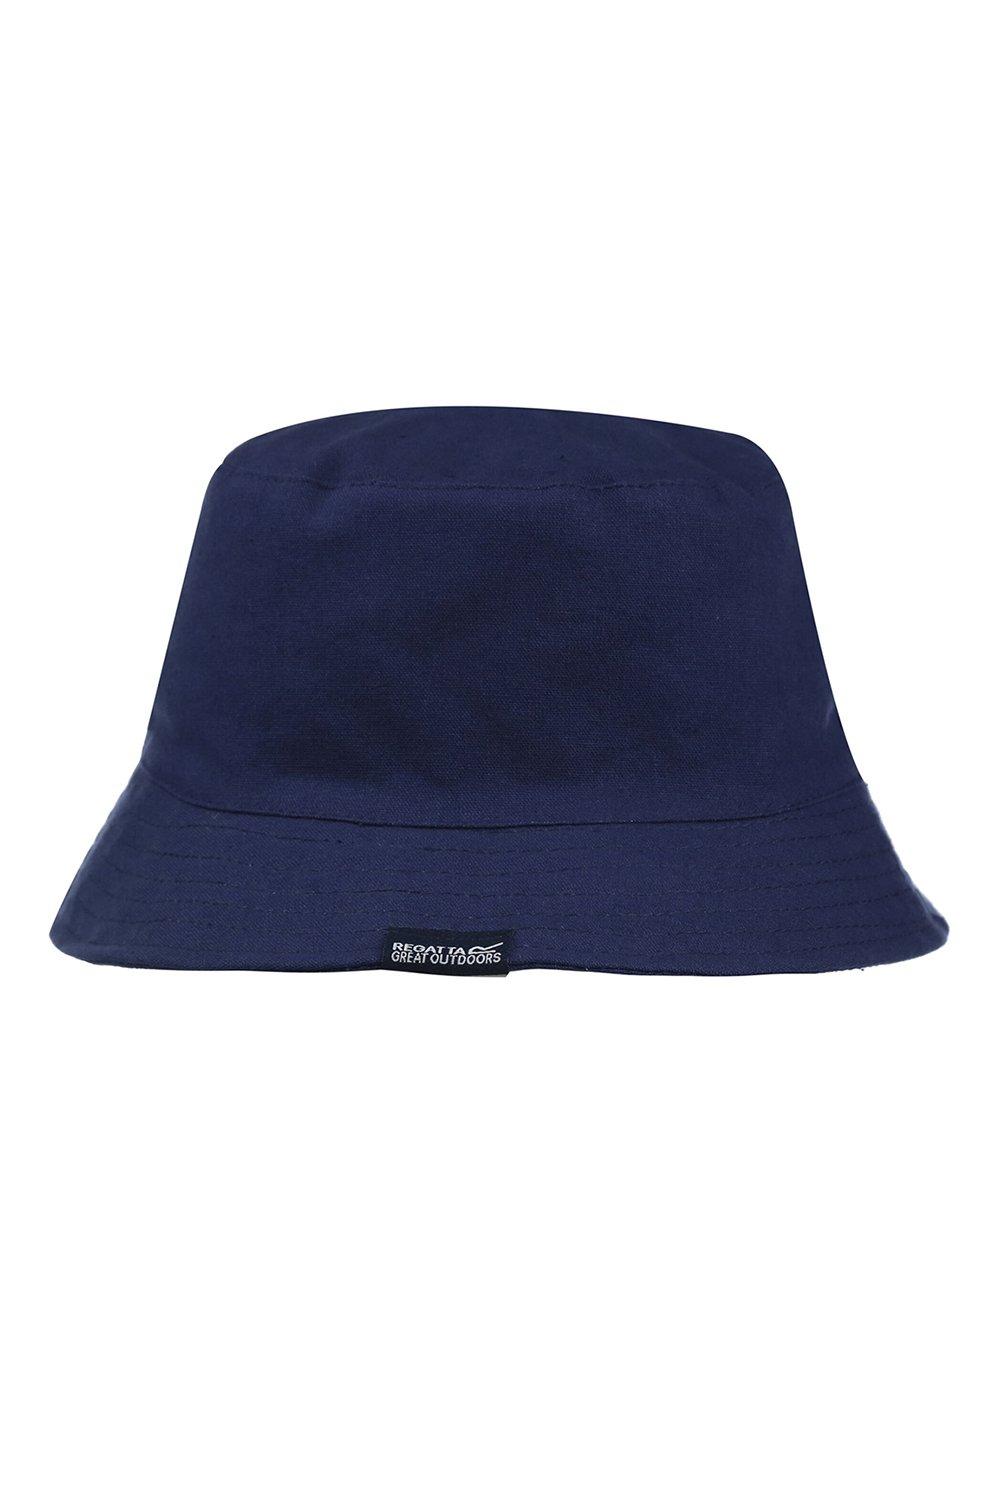 ’Crow’ Printed Coolweave Bucket Hat